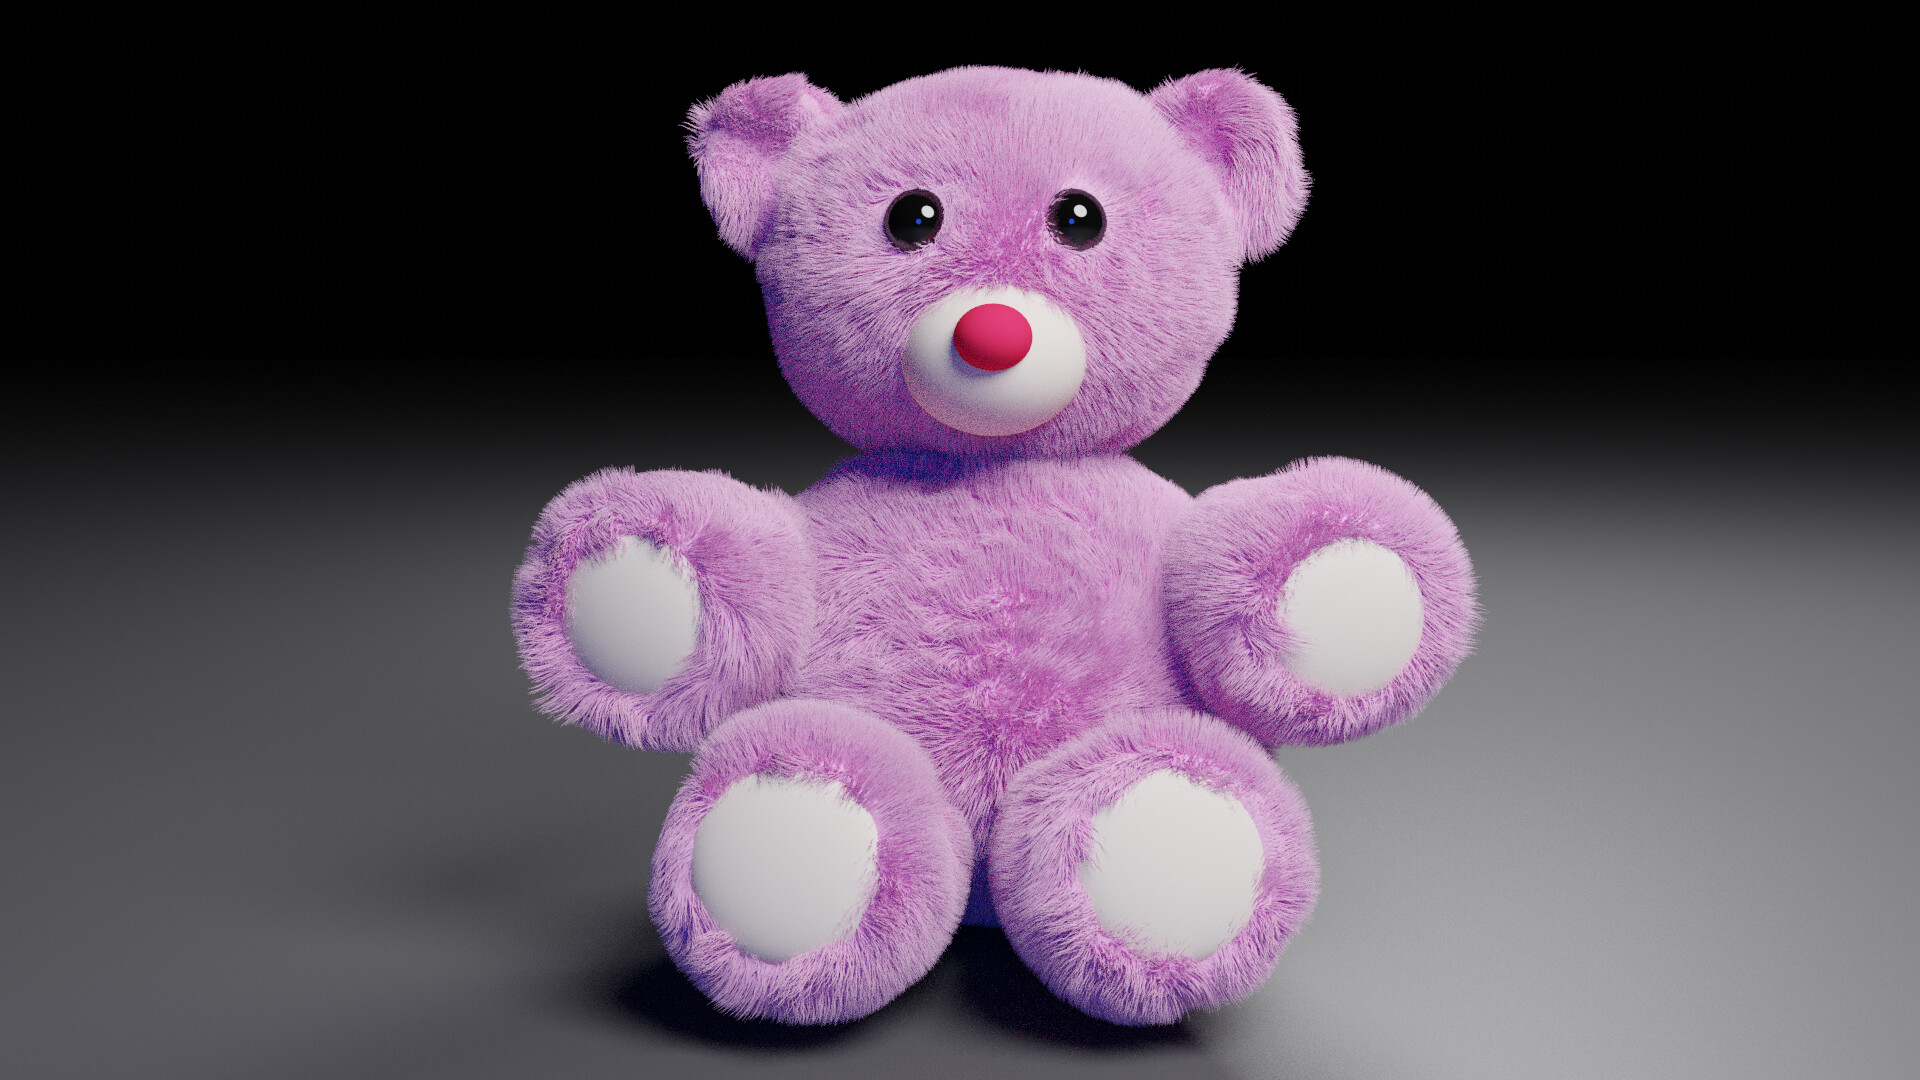 krishna teddy bear